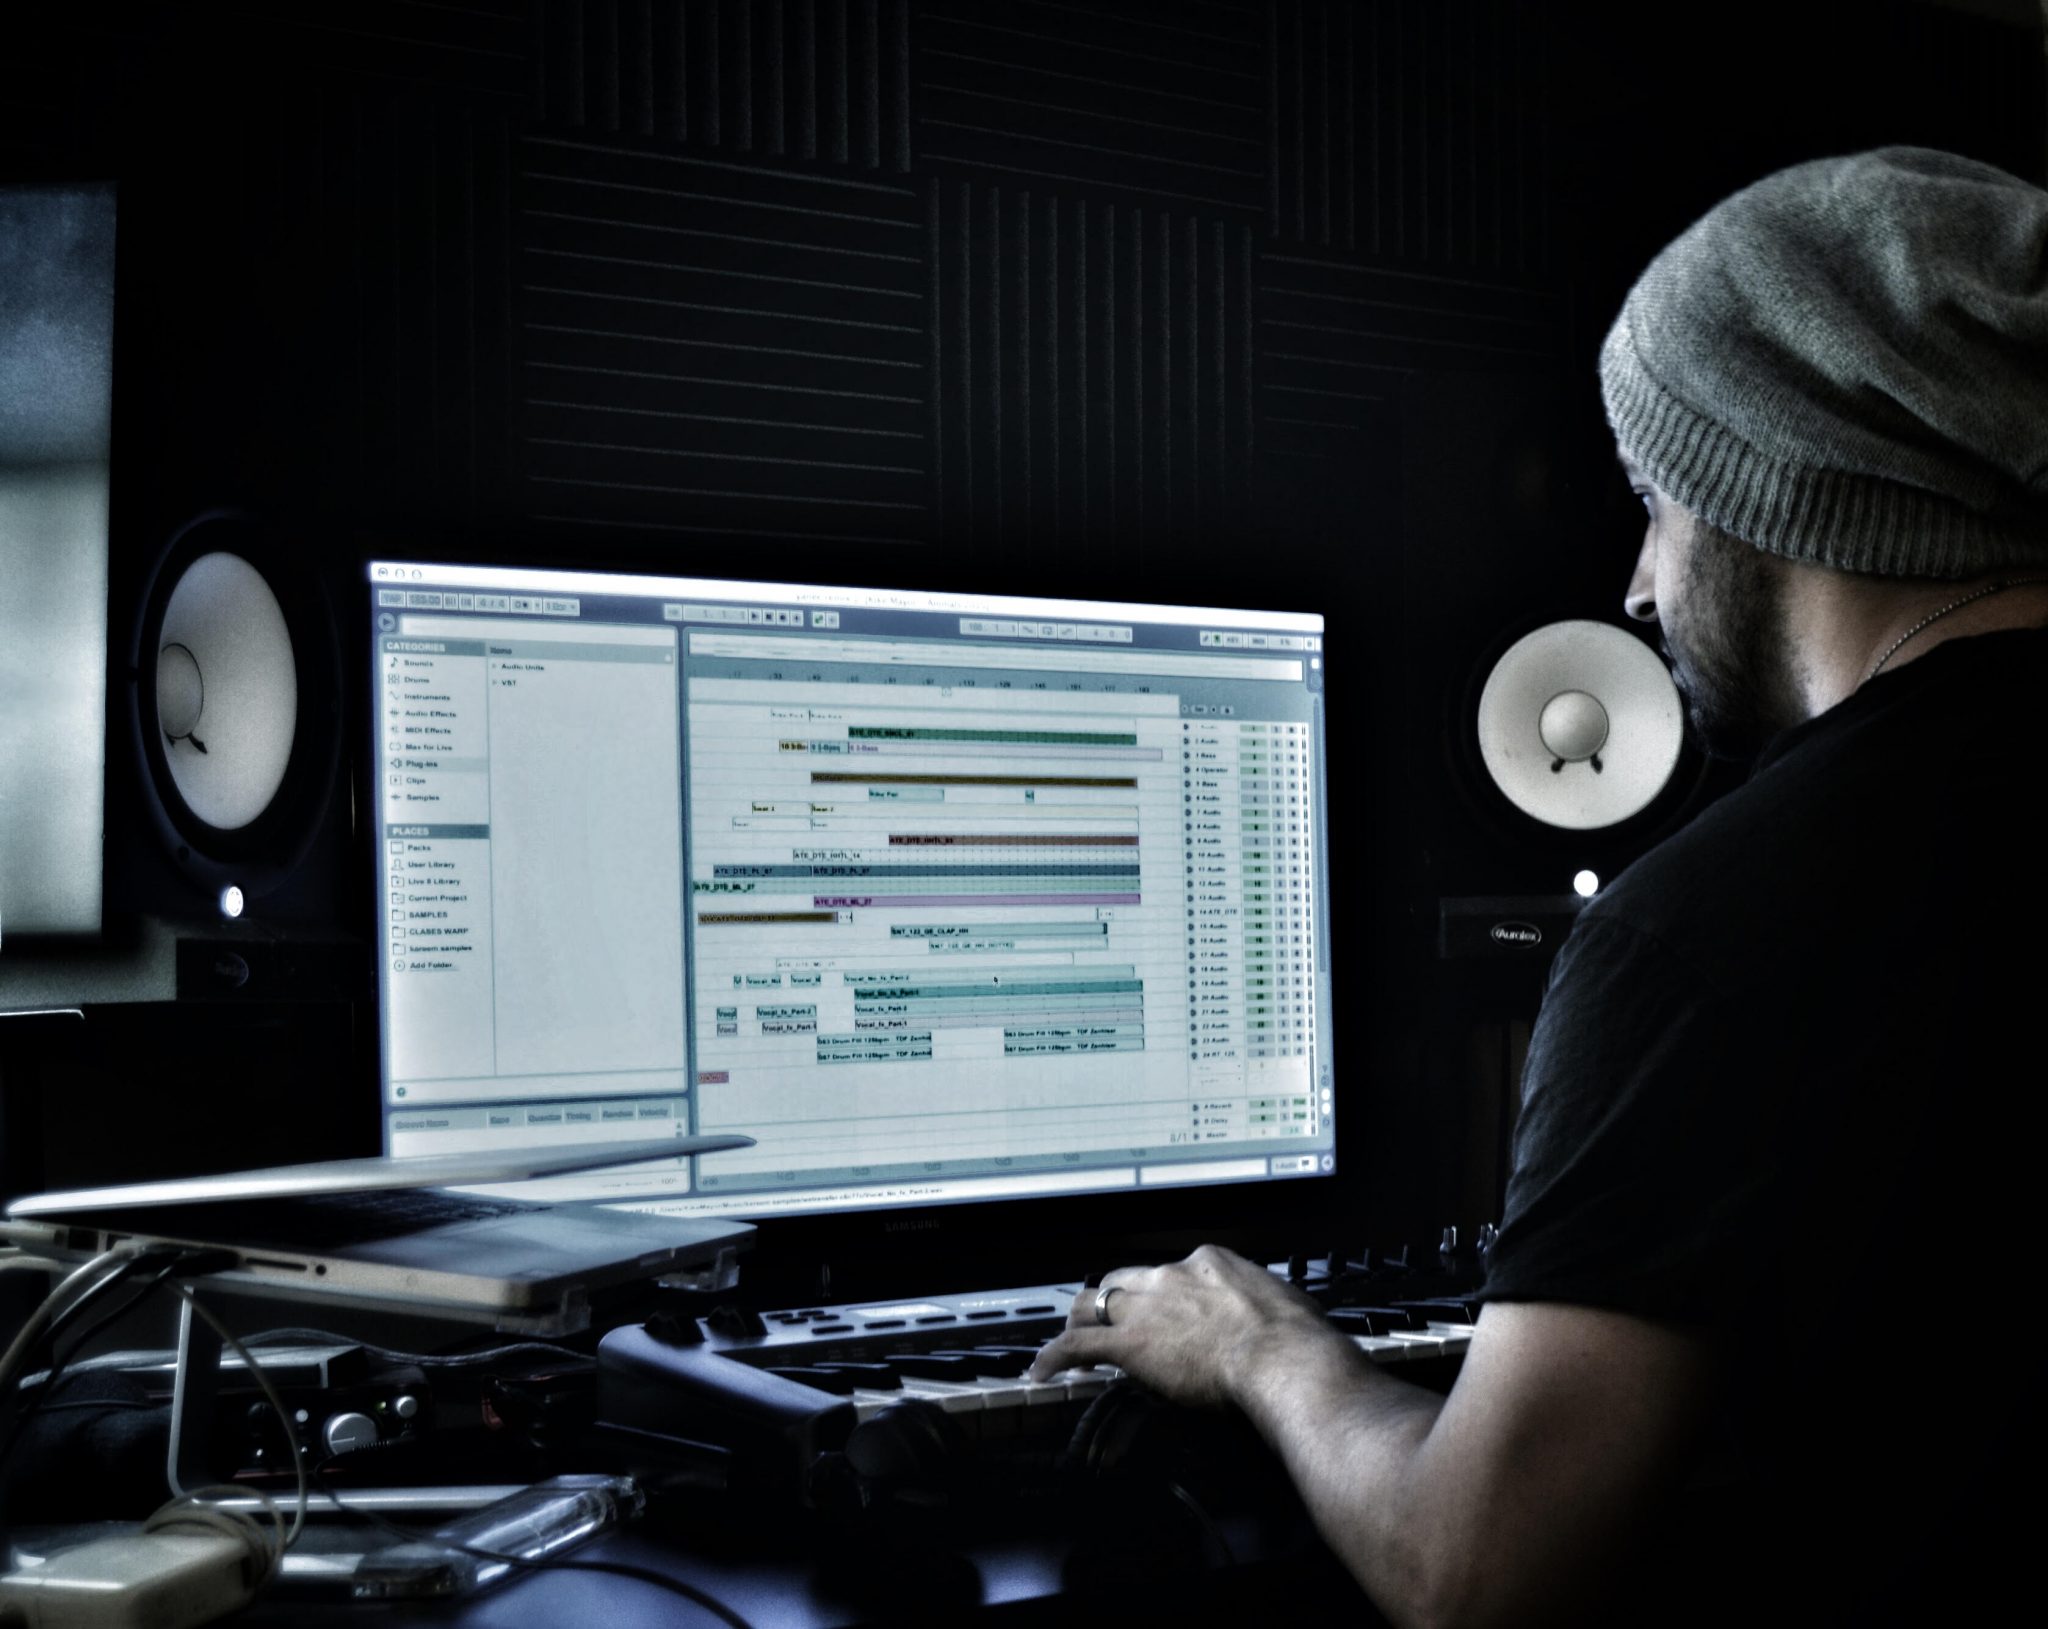 Pheek's mixdown services changed how techno producer Kike Mayor views music